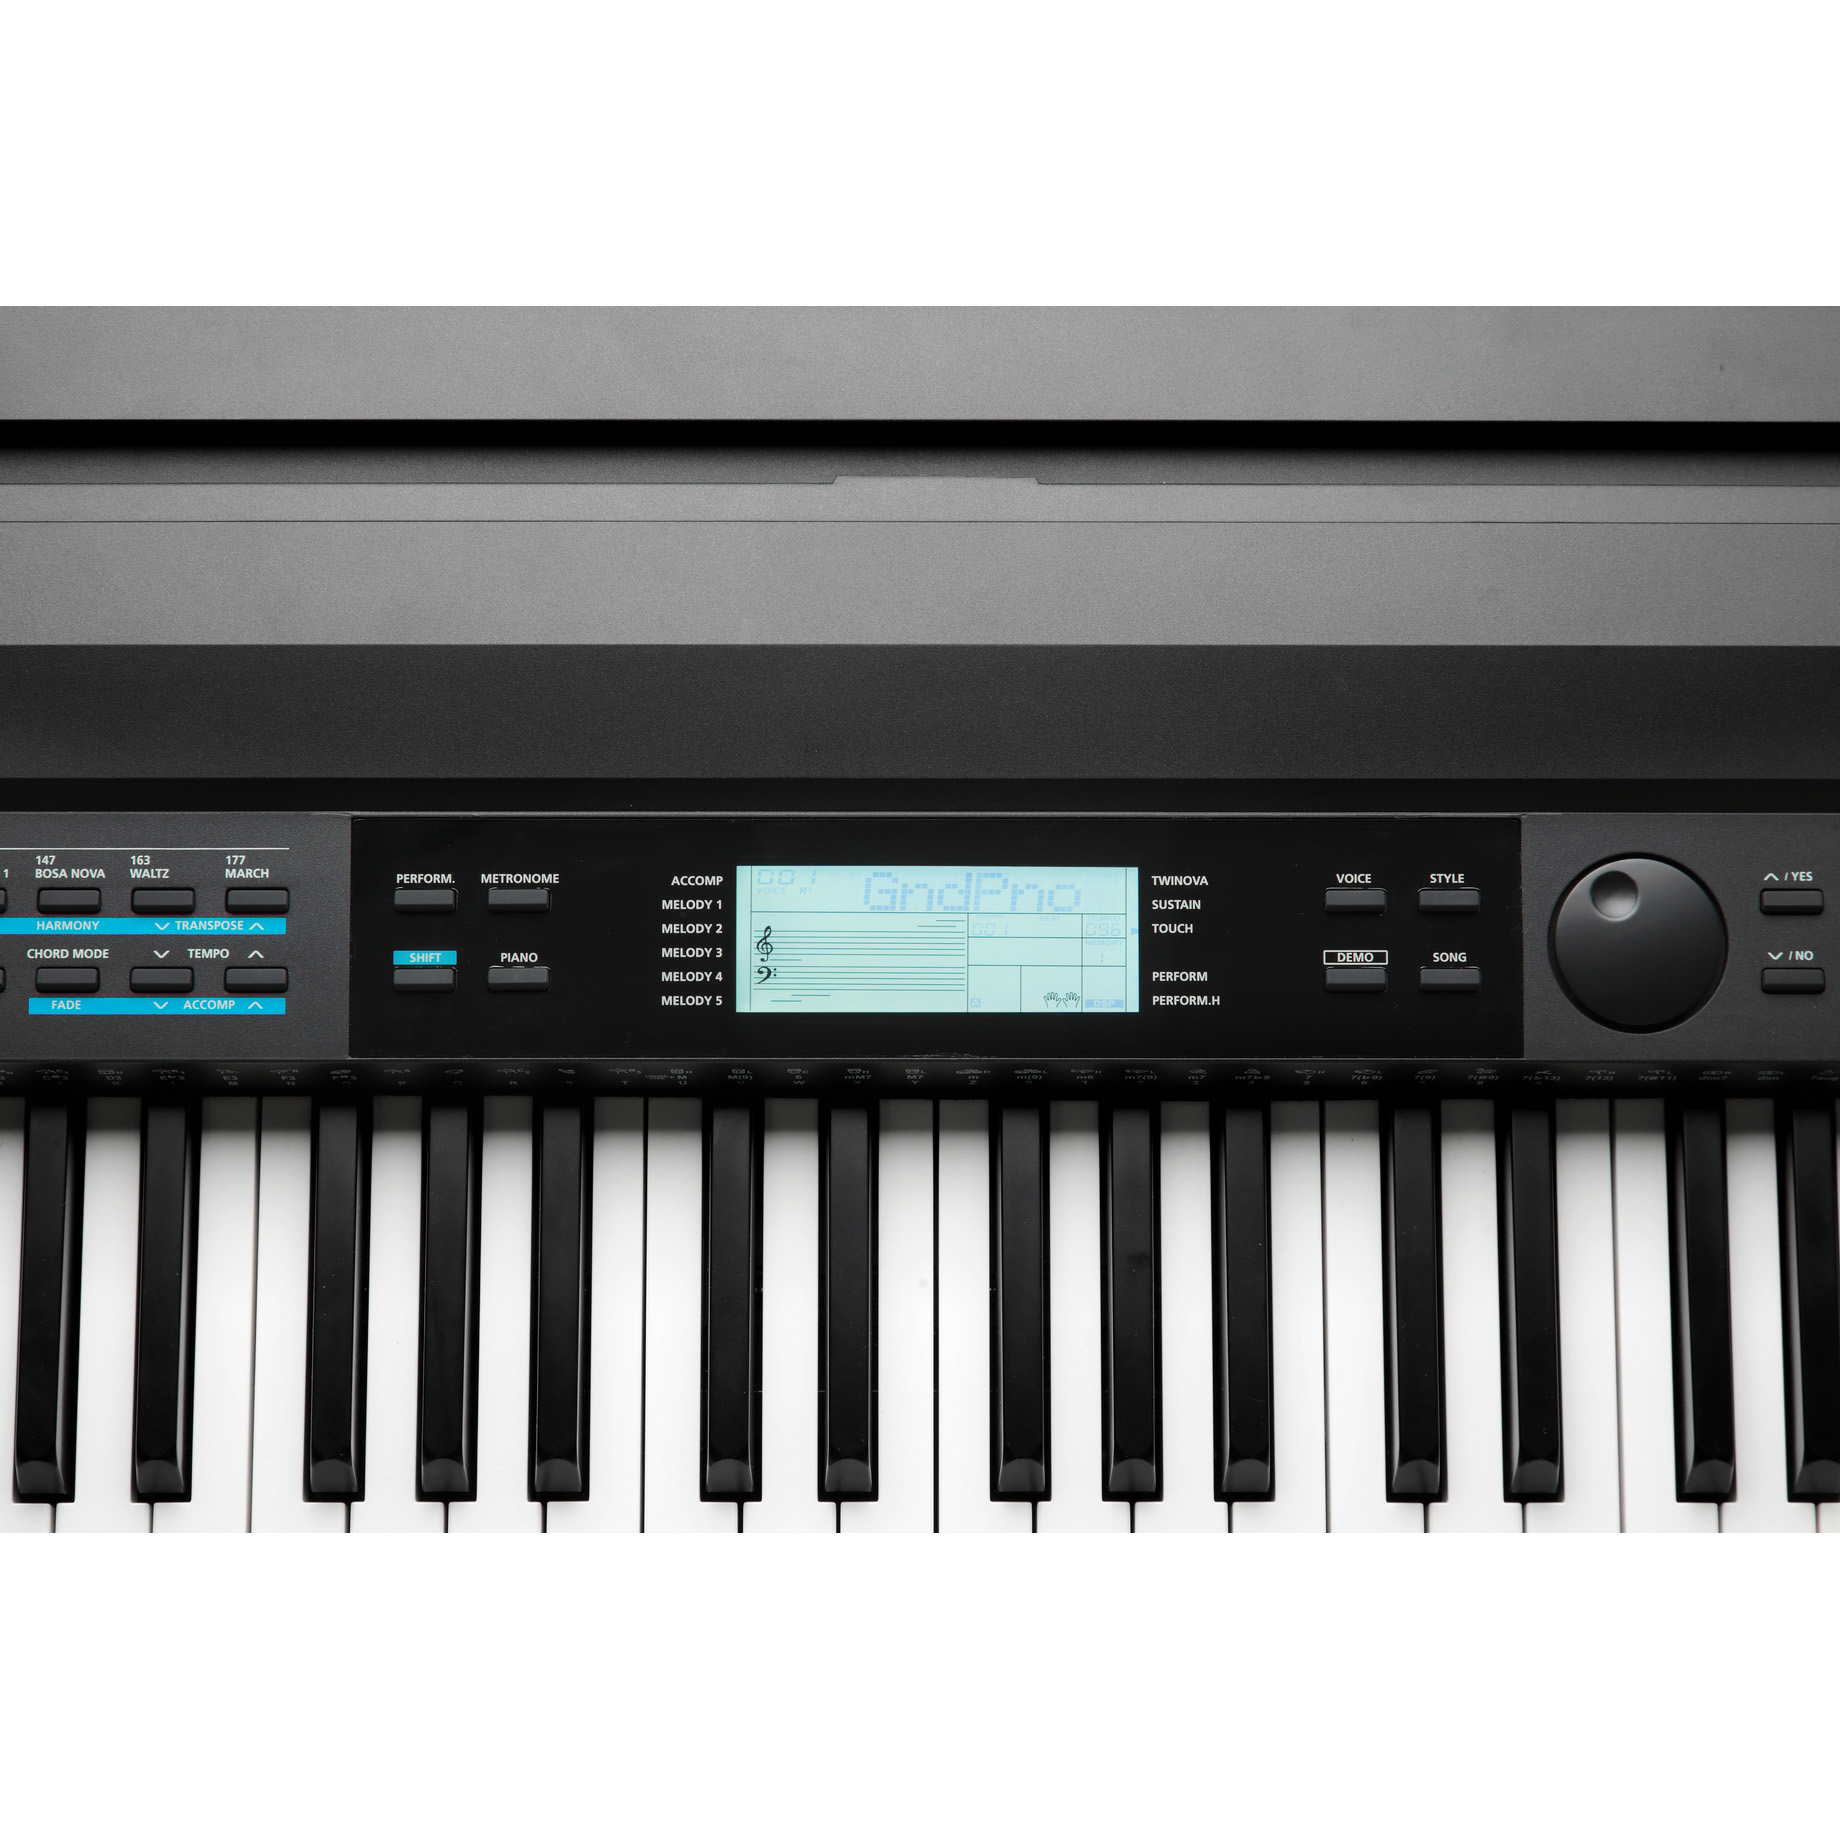 Kurzweil KA120 LB Цифровые пианино